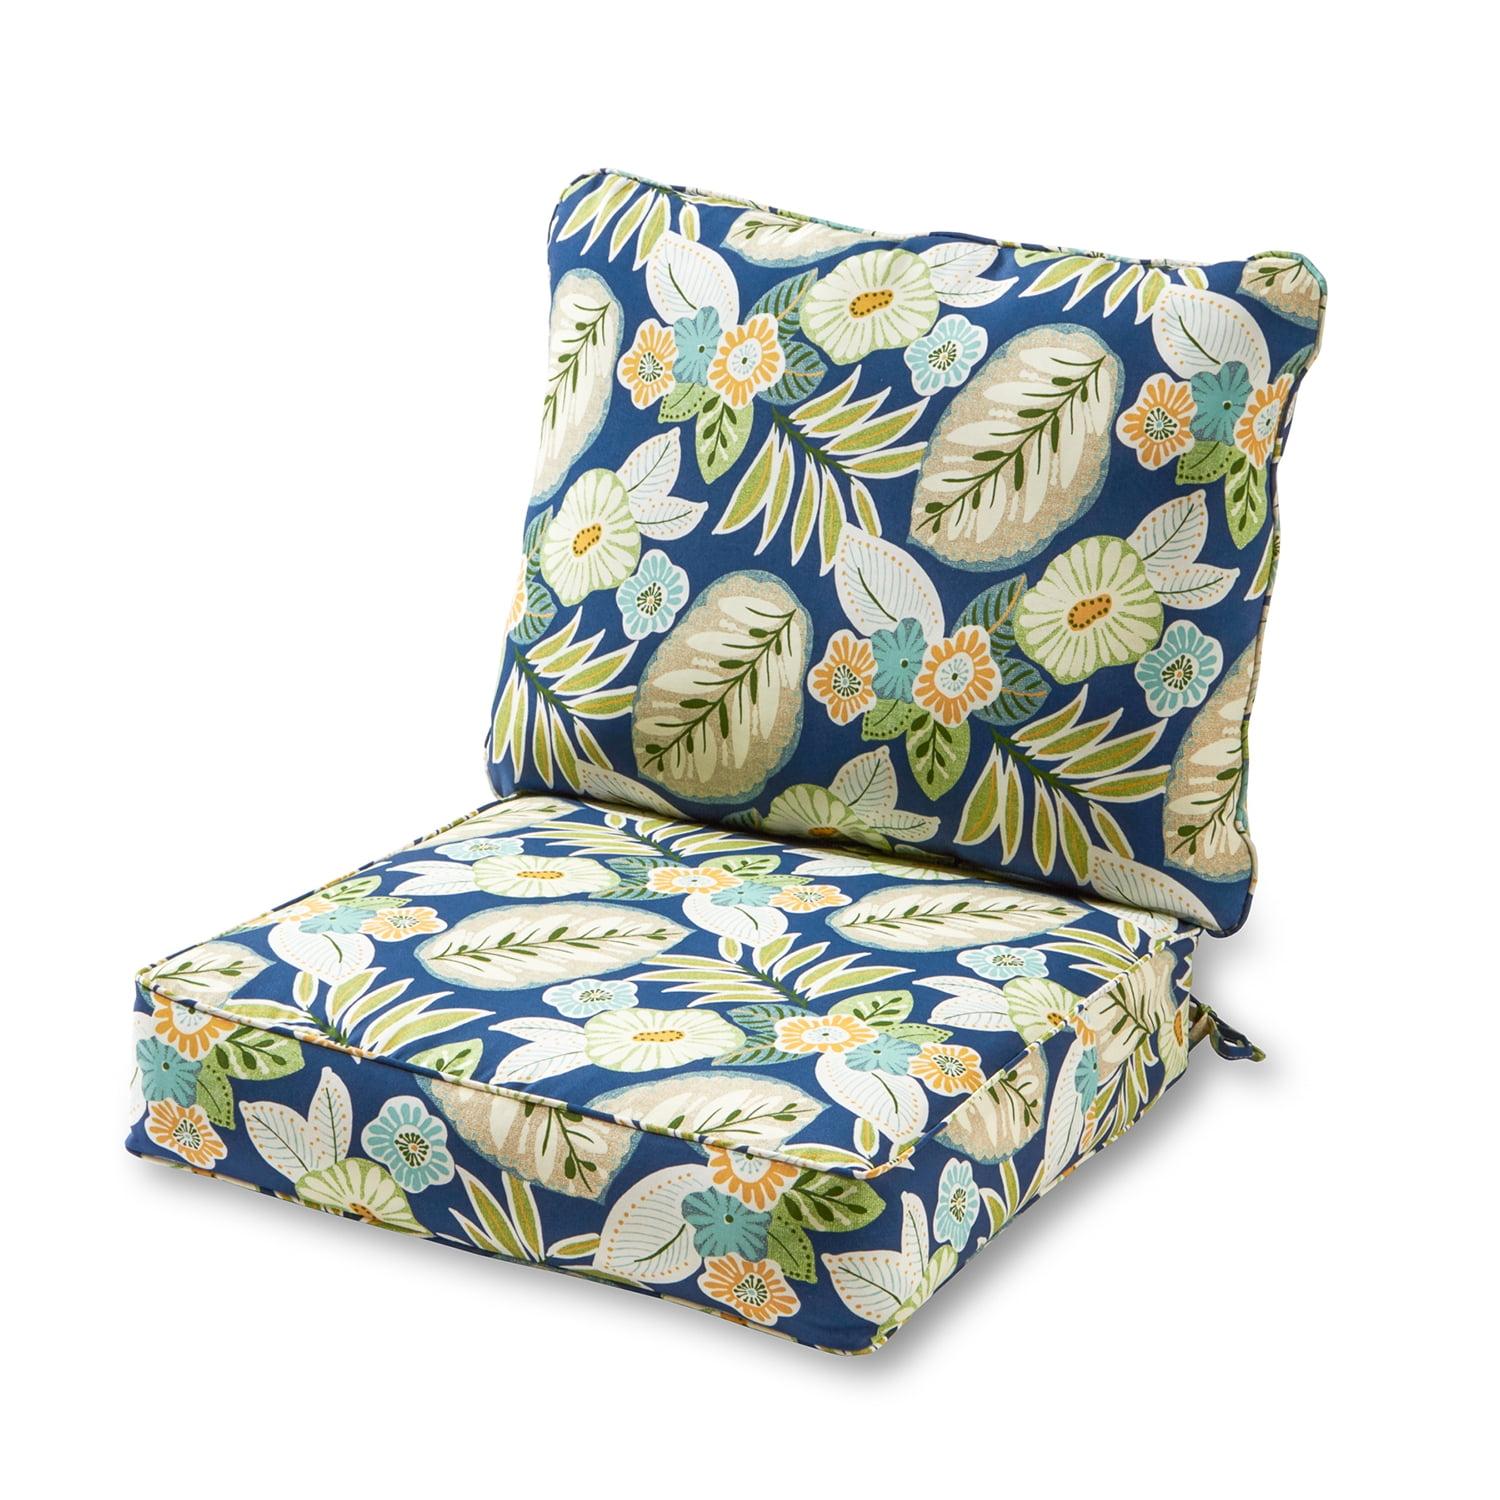 Marlow Blue Floral Contemporary Deep Seat Chair Cushion Set